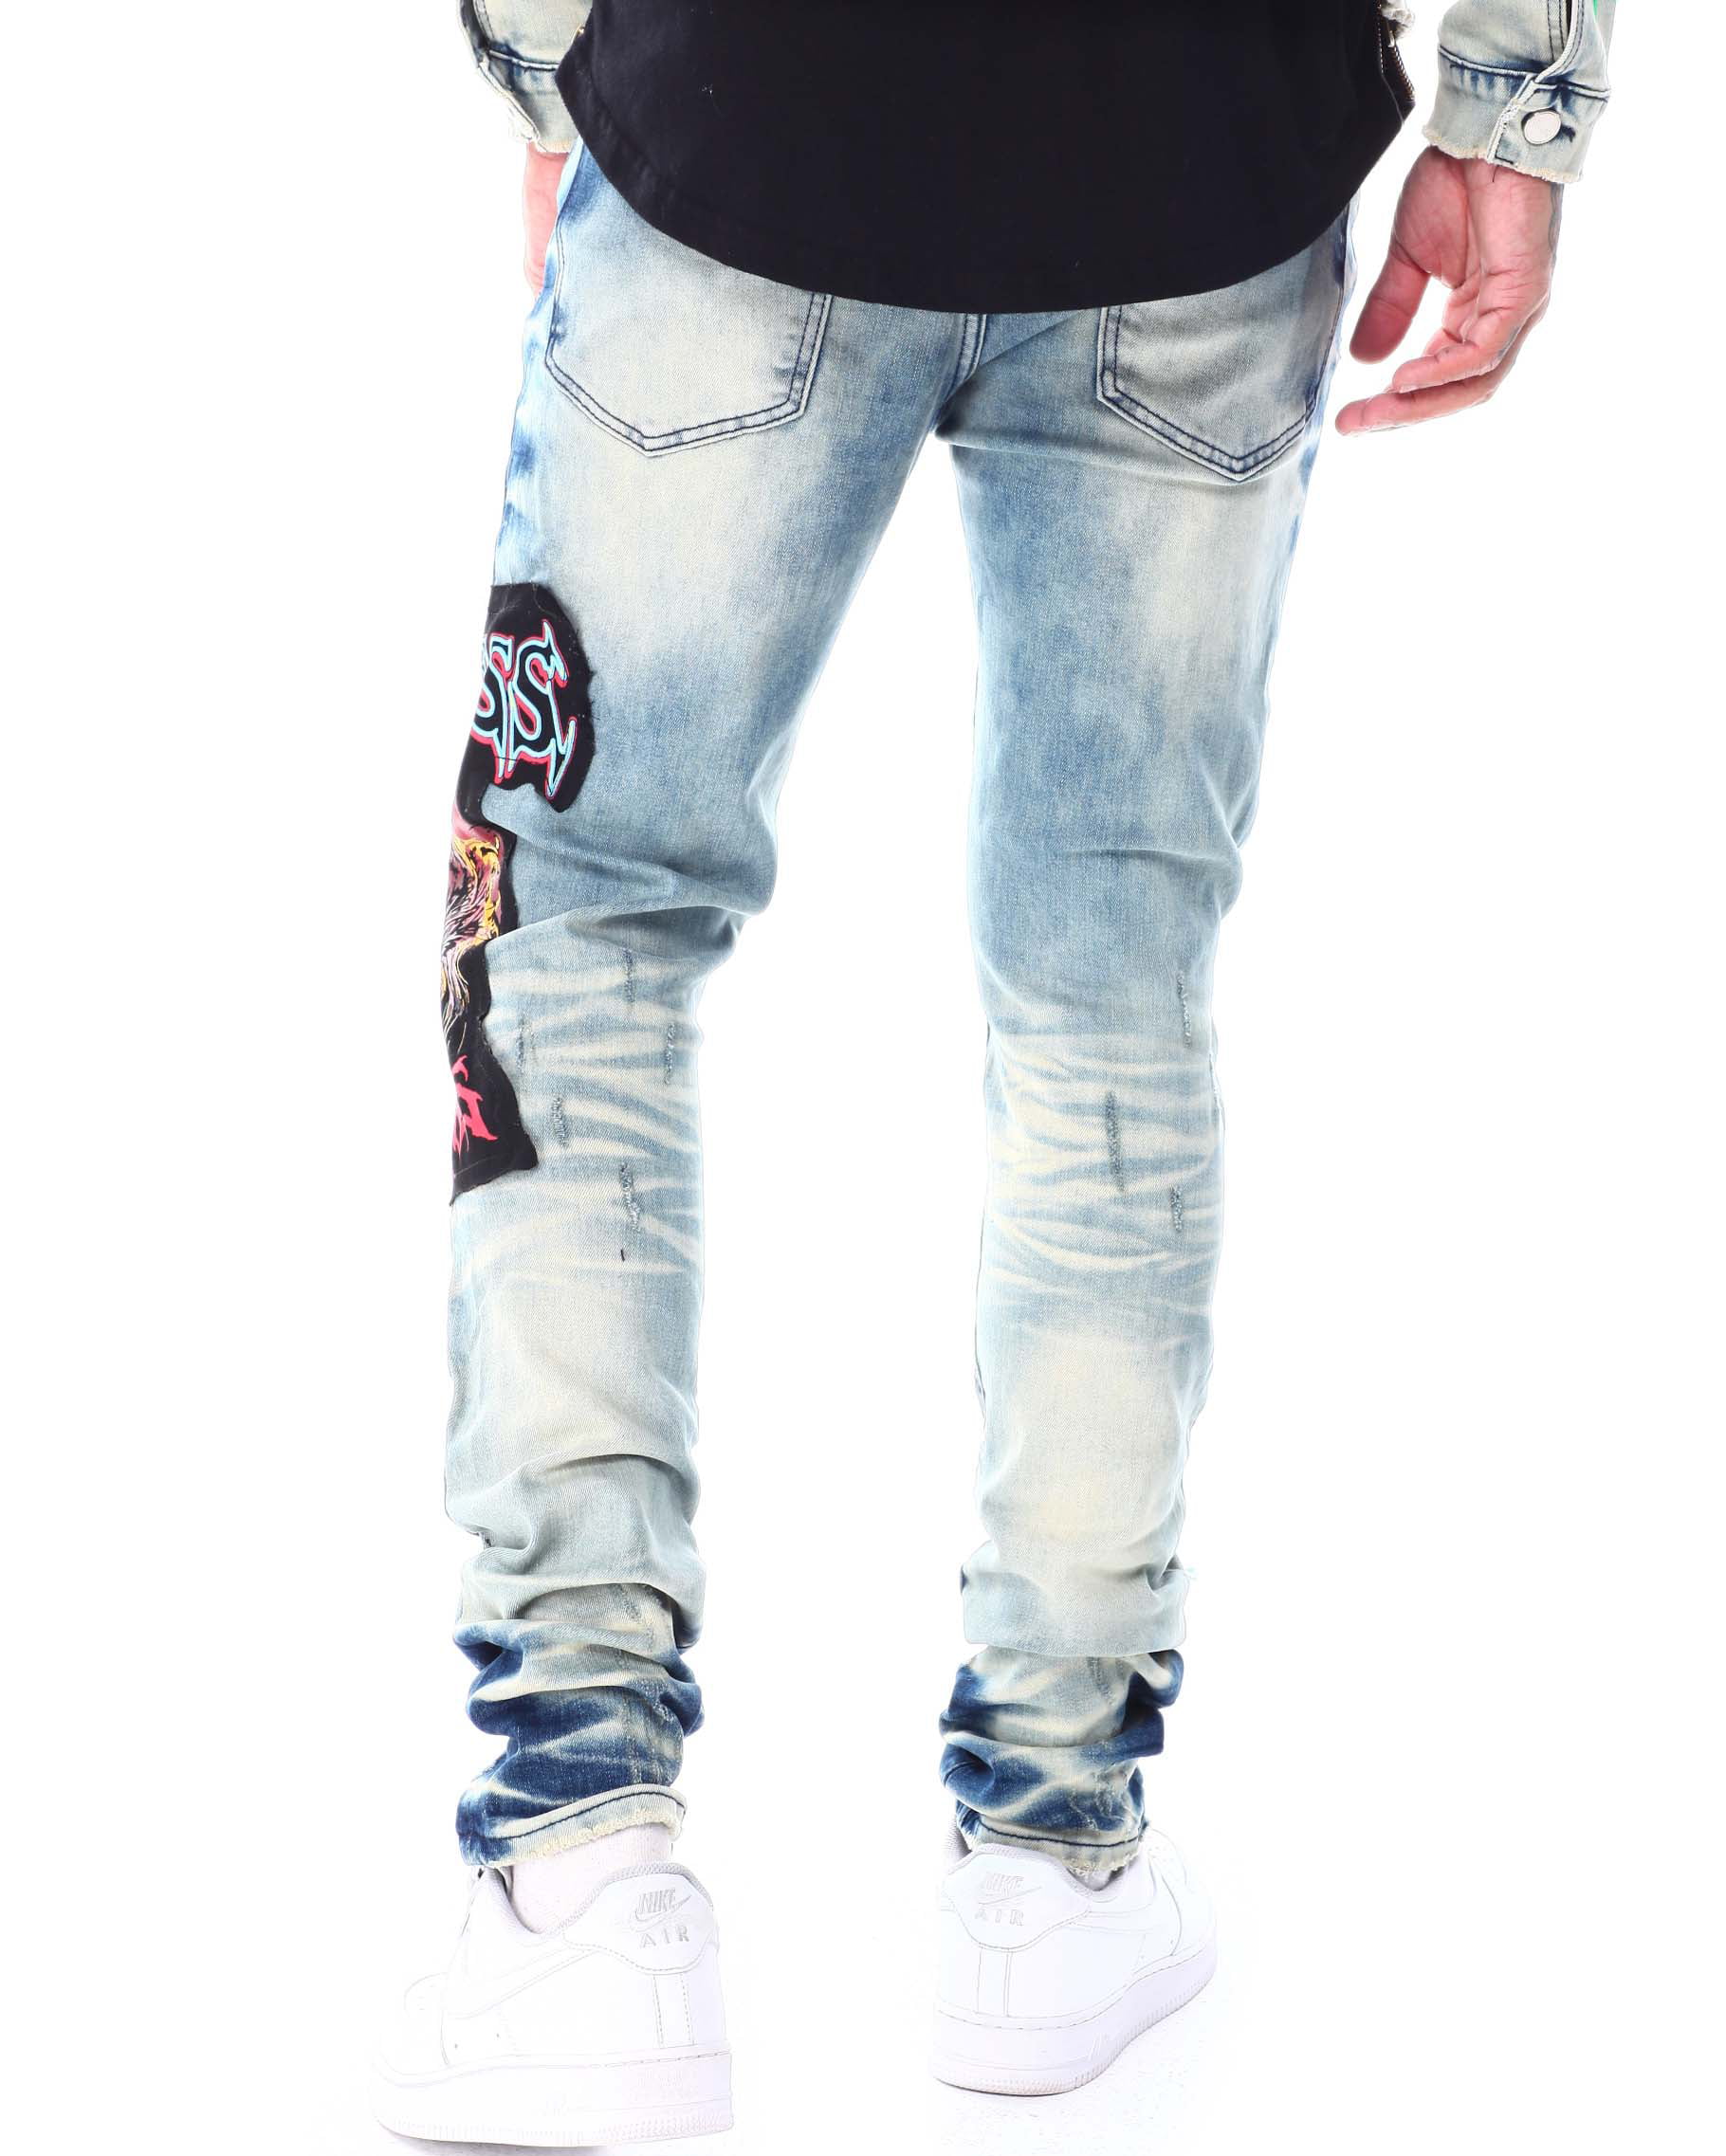 GFTD LA Los Angeles Details Men\'s (36, Distressed Ozz Painted Blue) Skinny Jeans Rip Fit